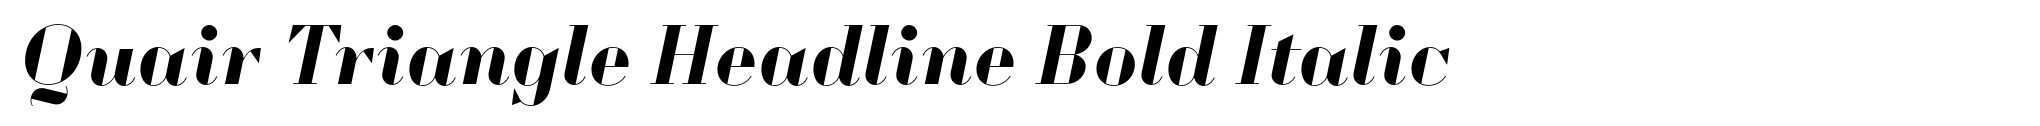 Quair Triangle Headline Bold Italic image